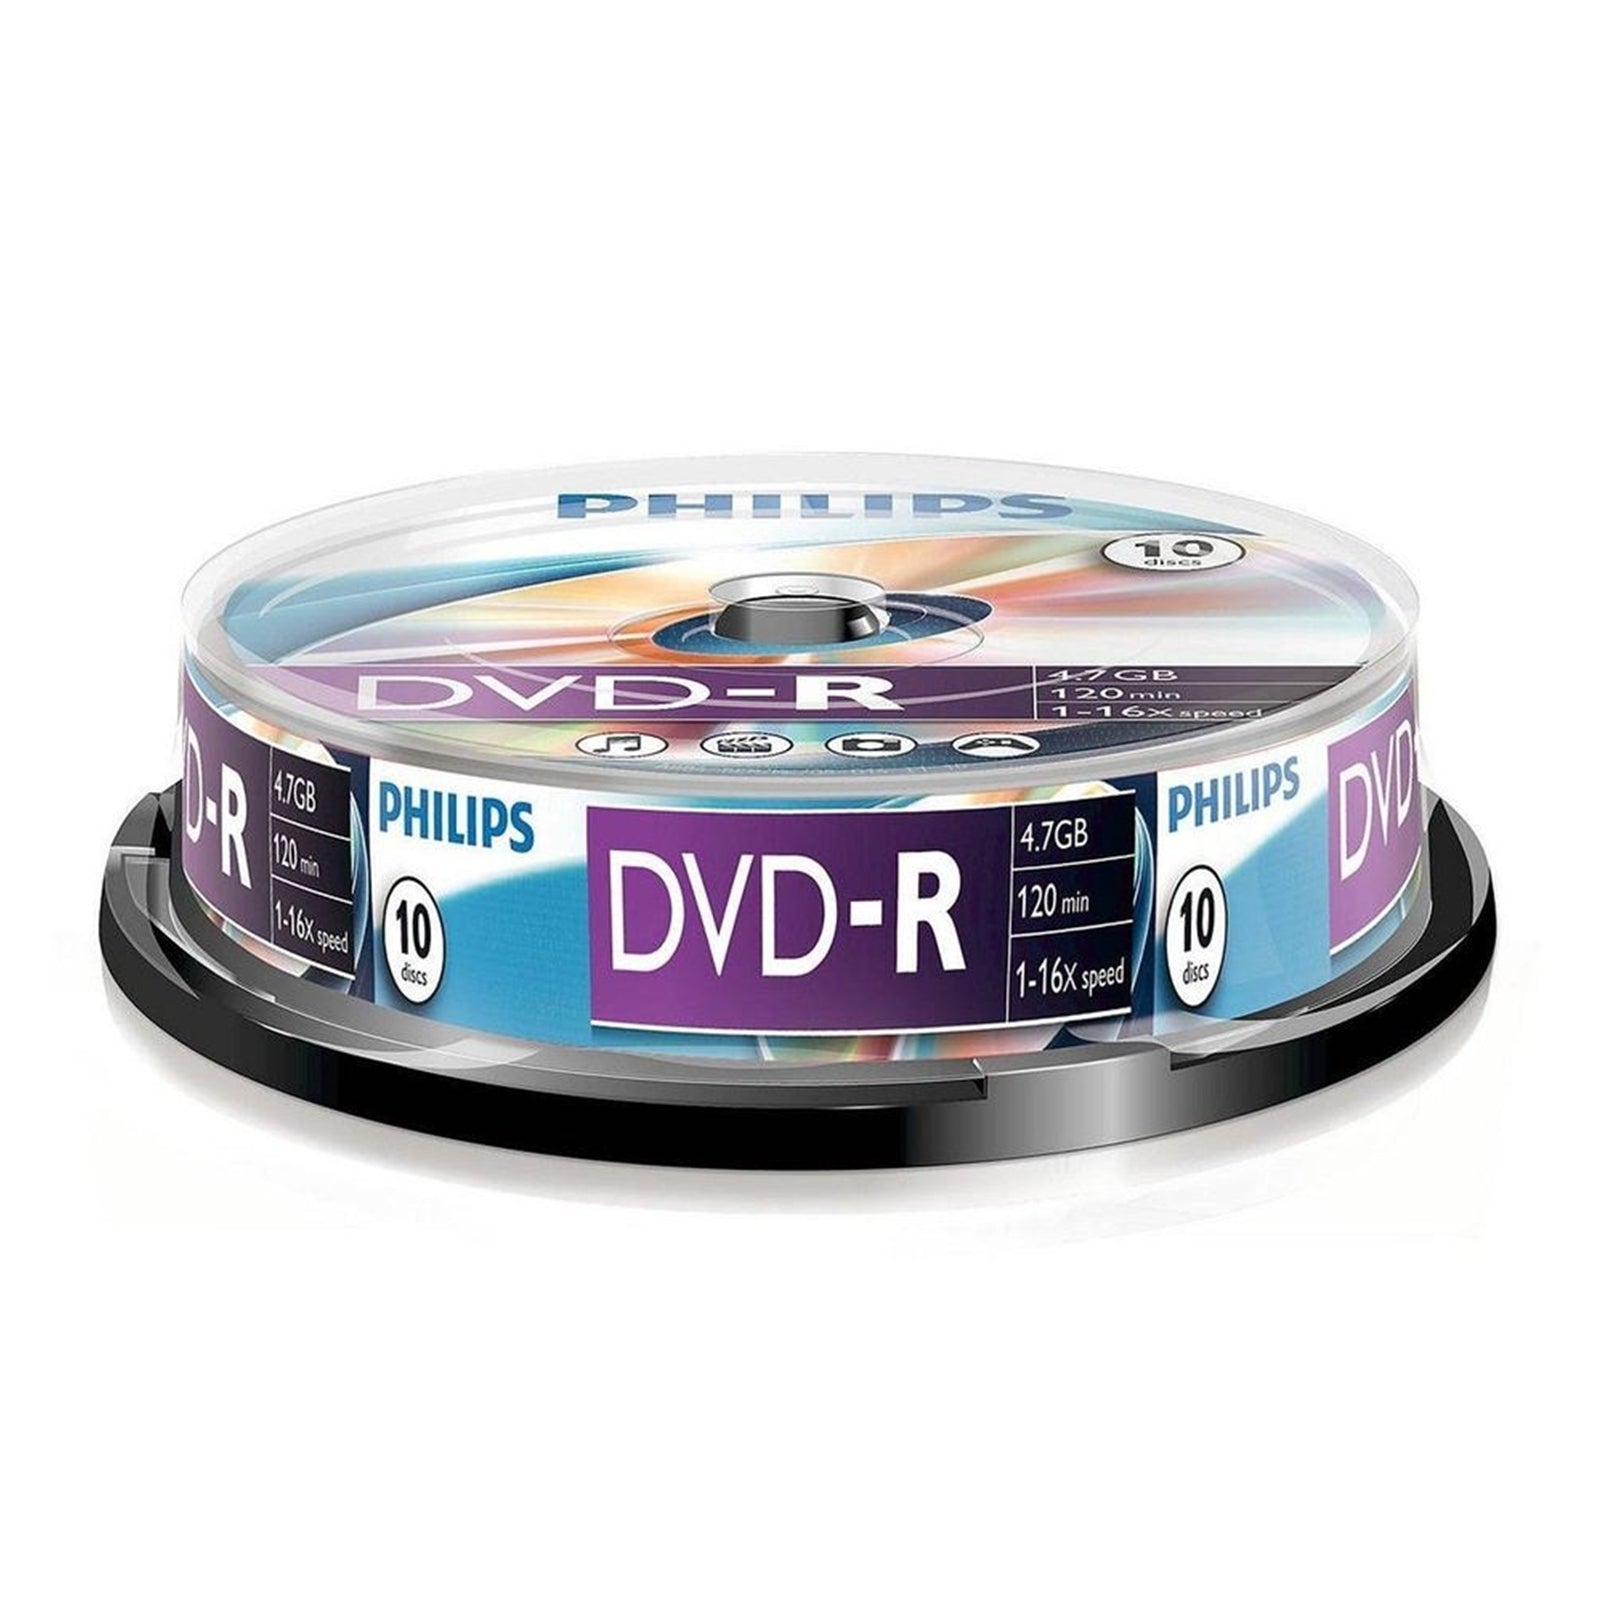 Philips DVD-R 16X 4.7GB 120 min 10 PK Spindle Cake box